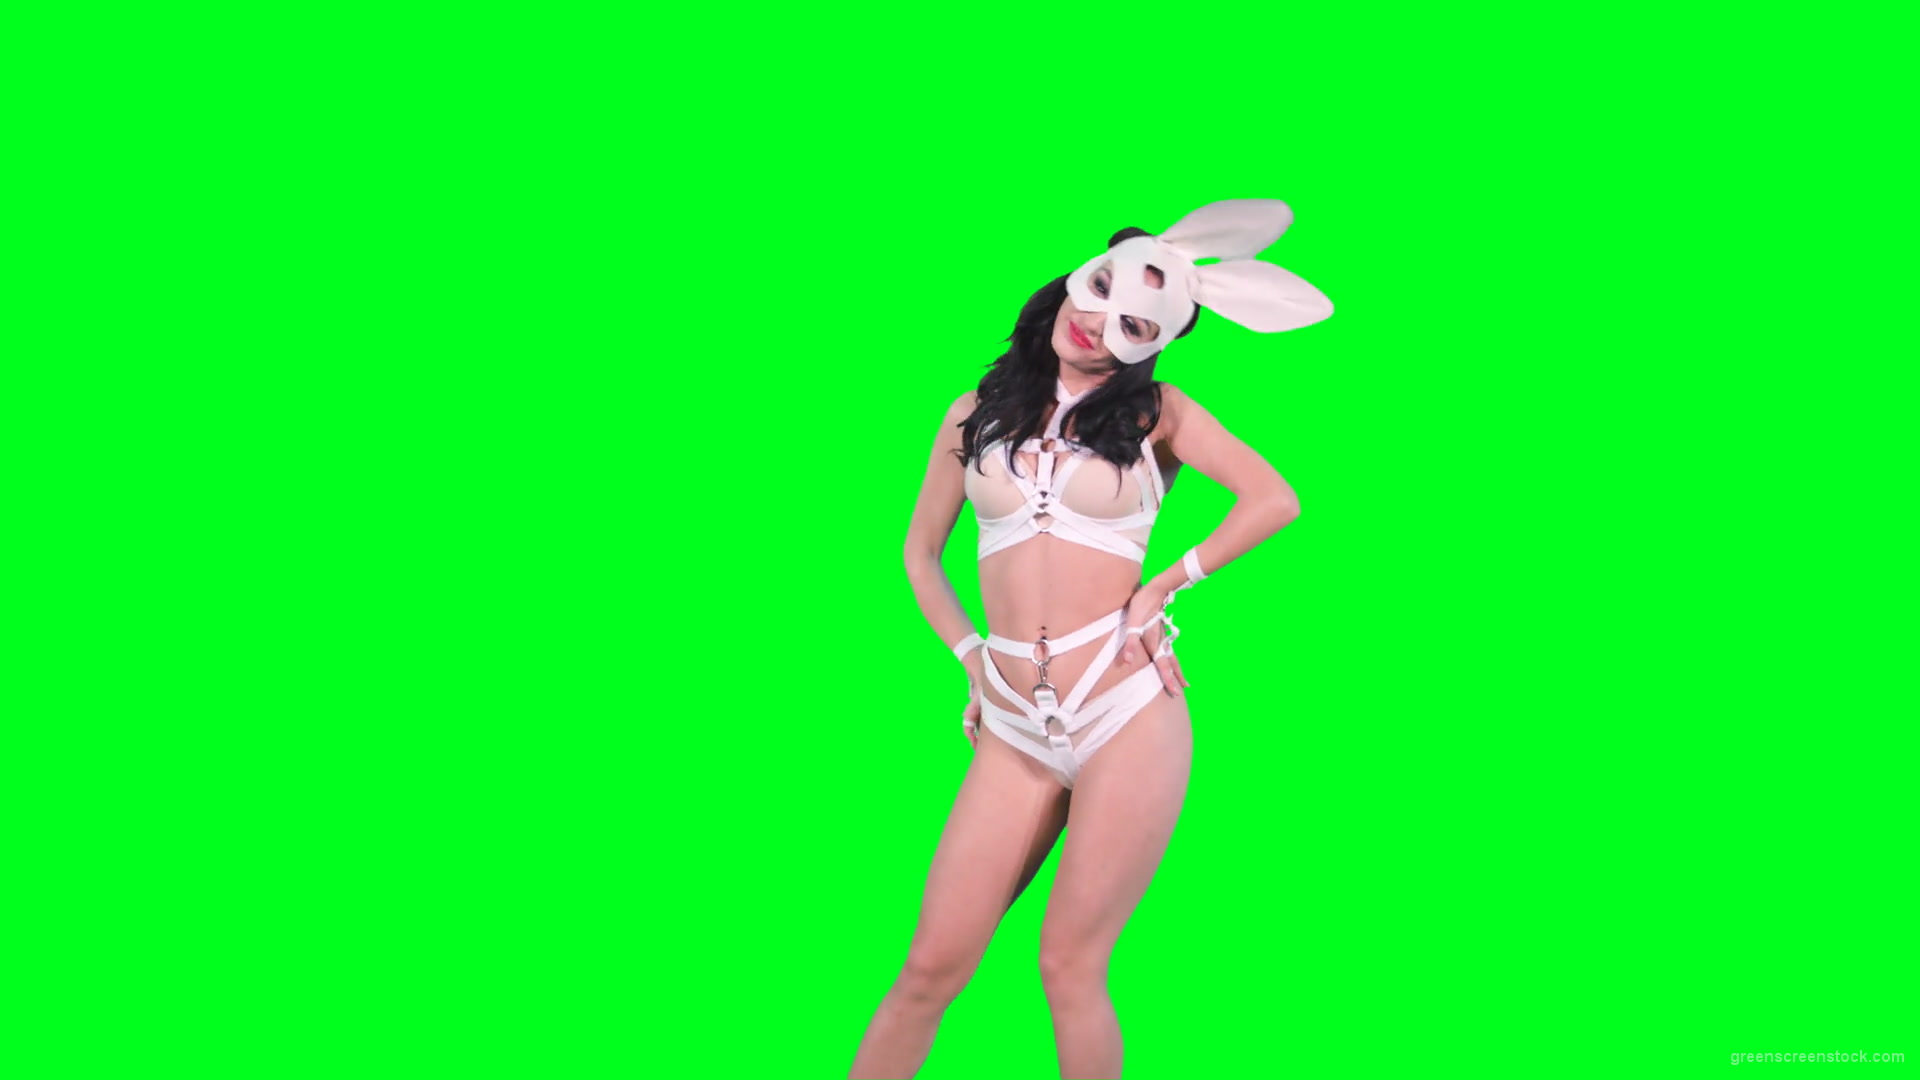 Green-Srcreen-Girl-in-rabbit-costume-sending-air-kiss-4k-Video-Footage-1920_005 Green Screen Stock